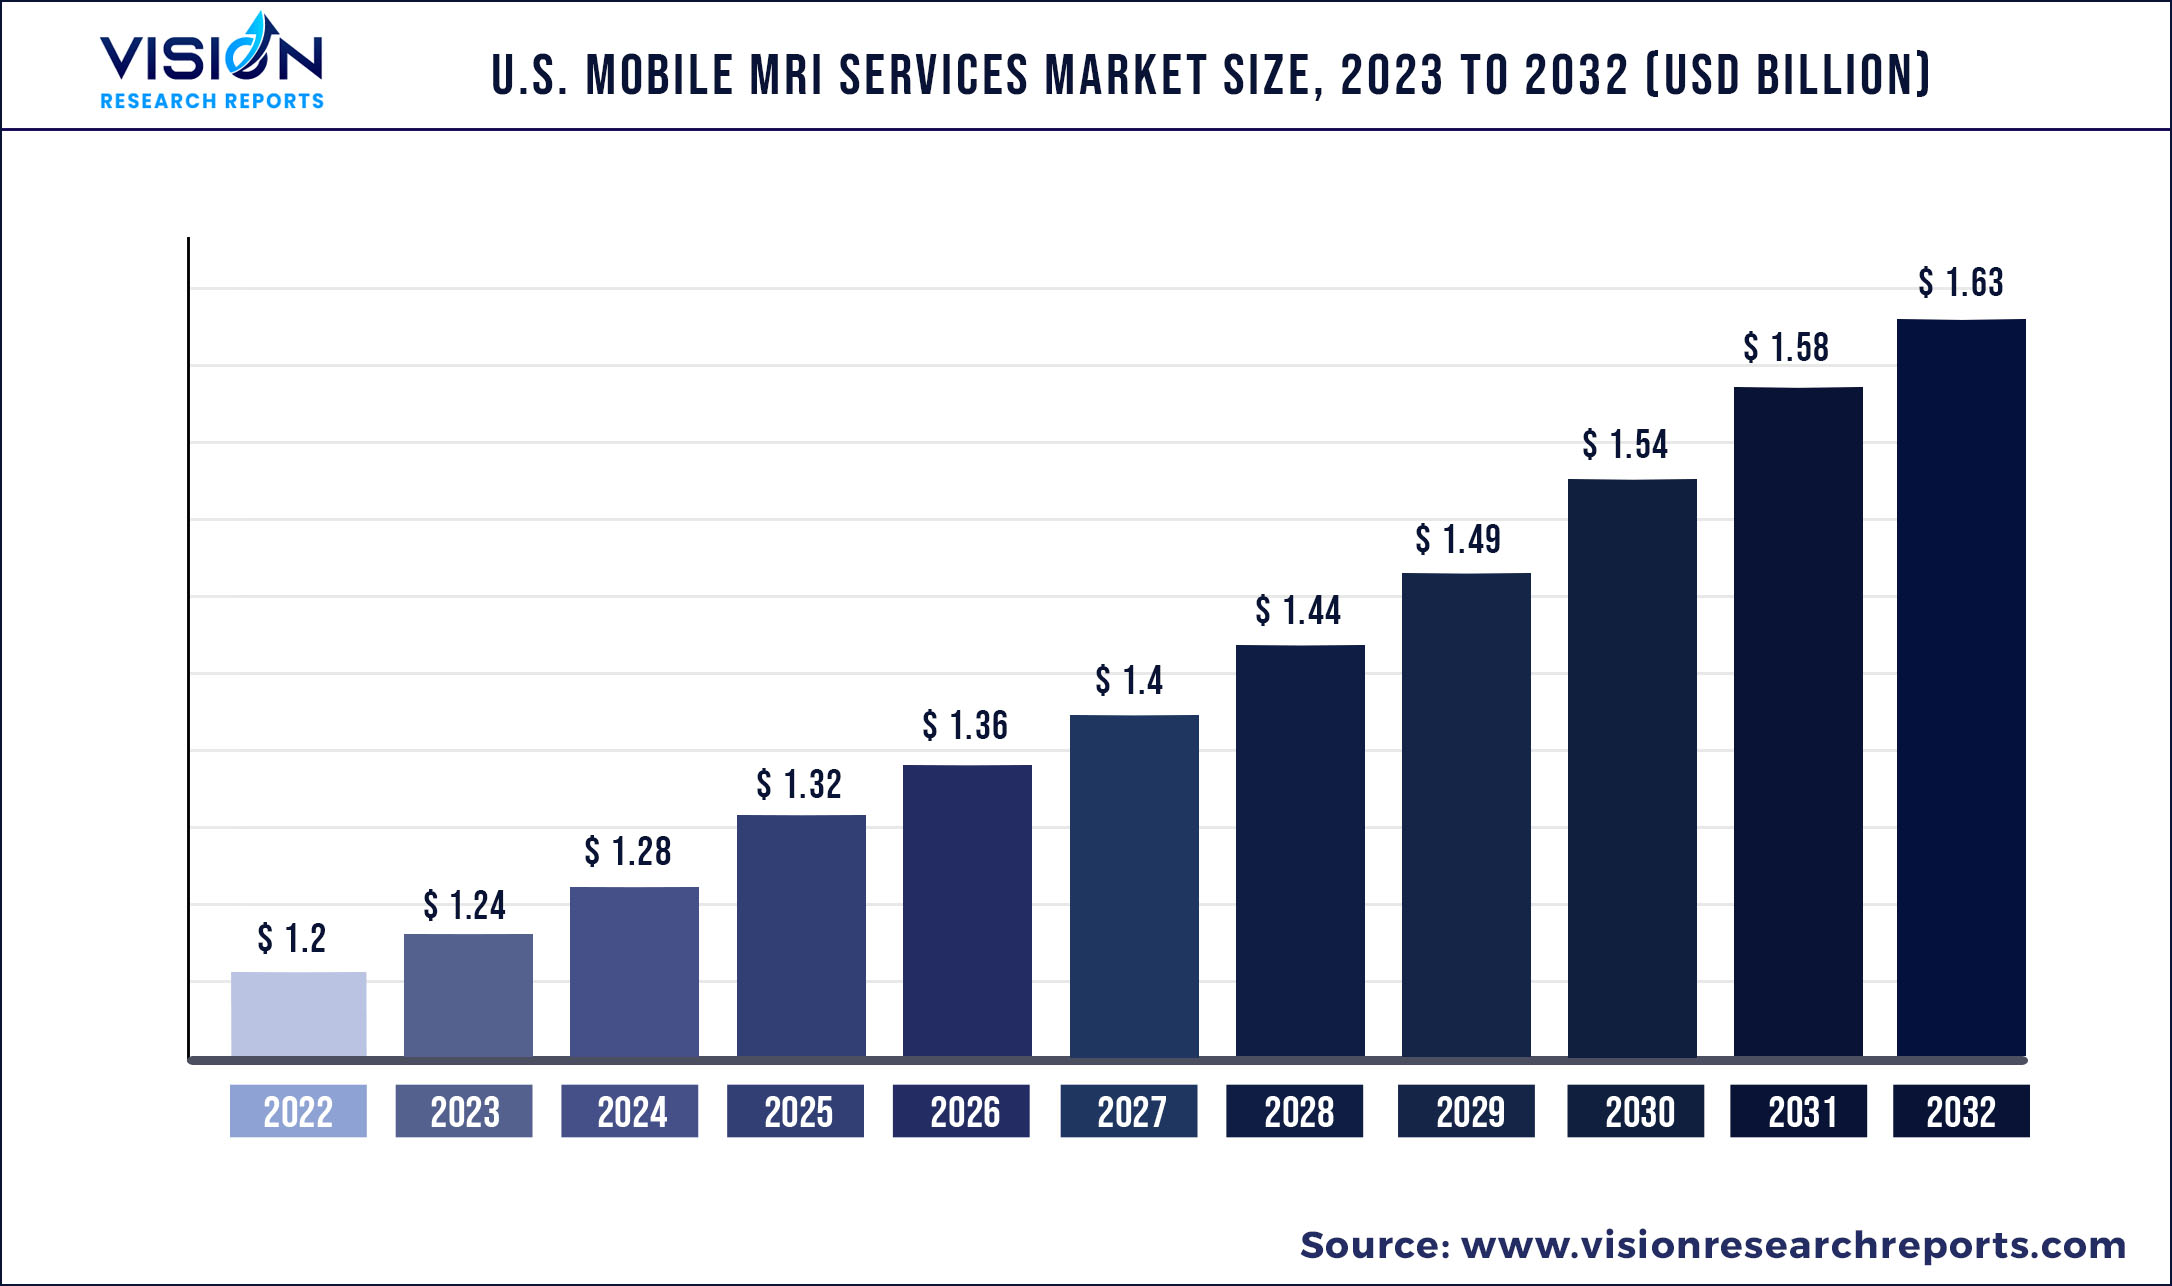 U.S. Mobile MRI Services Market Size 2023 to 2032